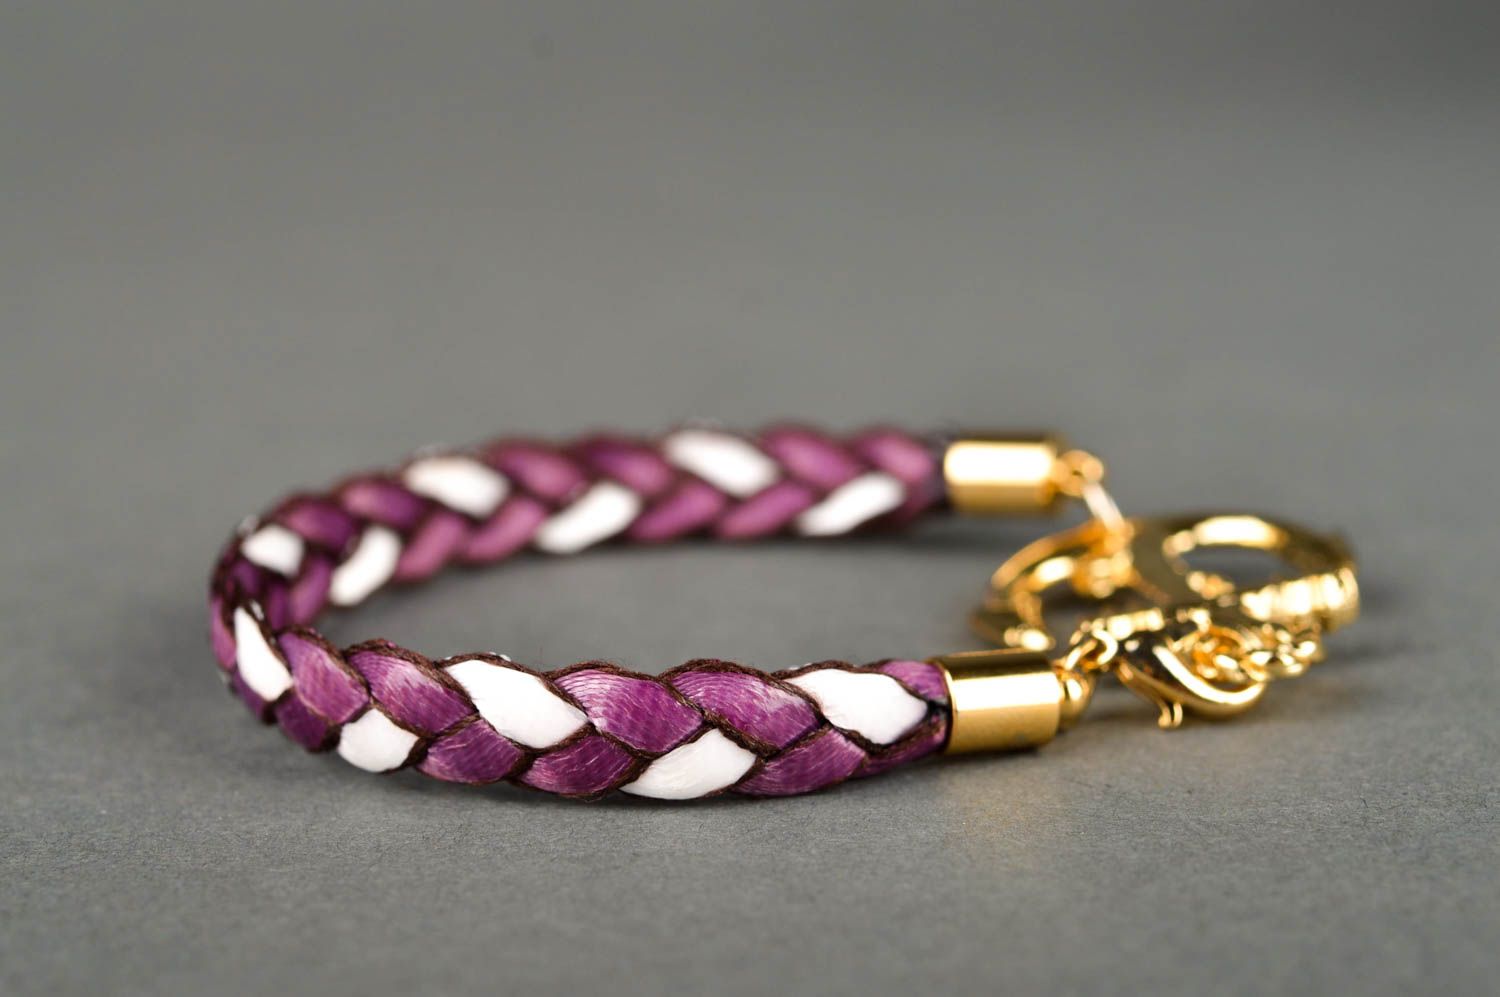 Handmade bracelet designer bracelet fashion accessories for women cool gifts photo 3